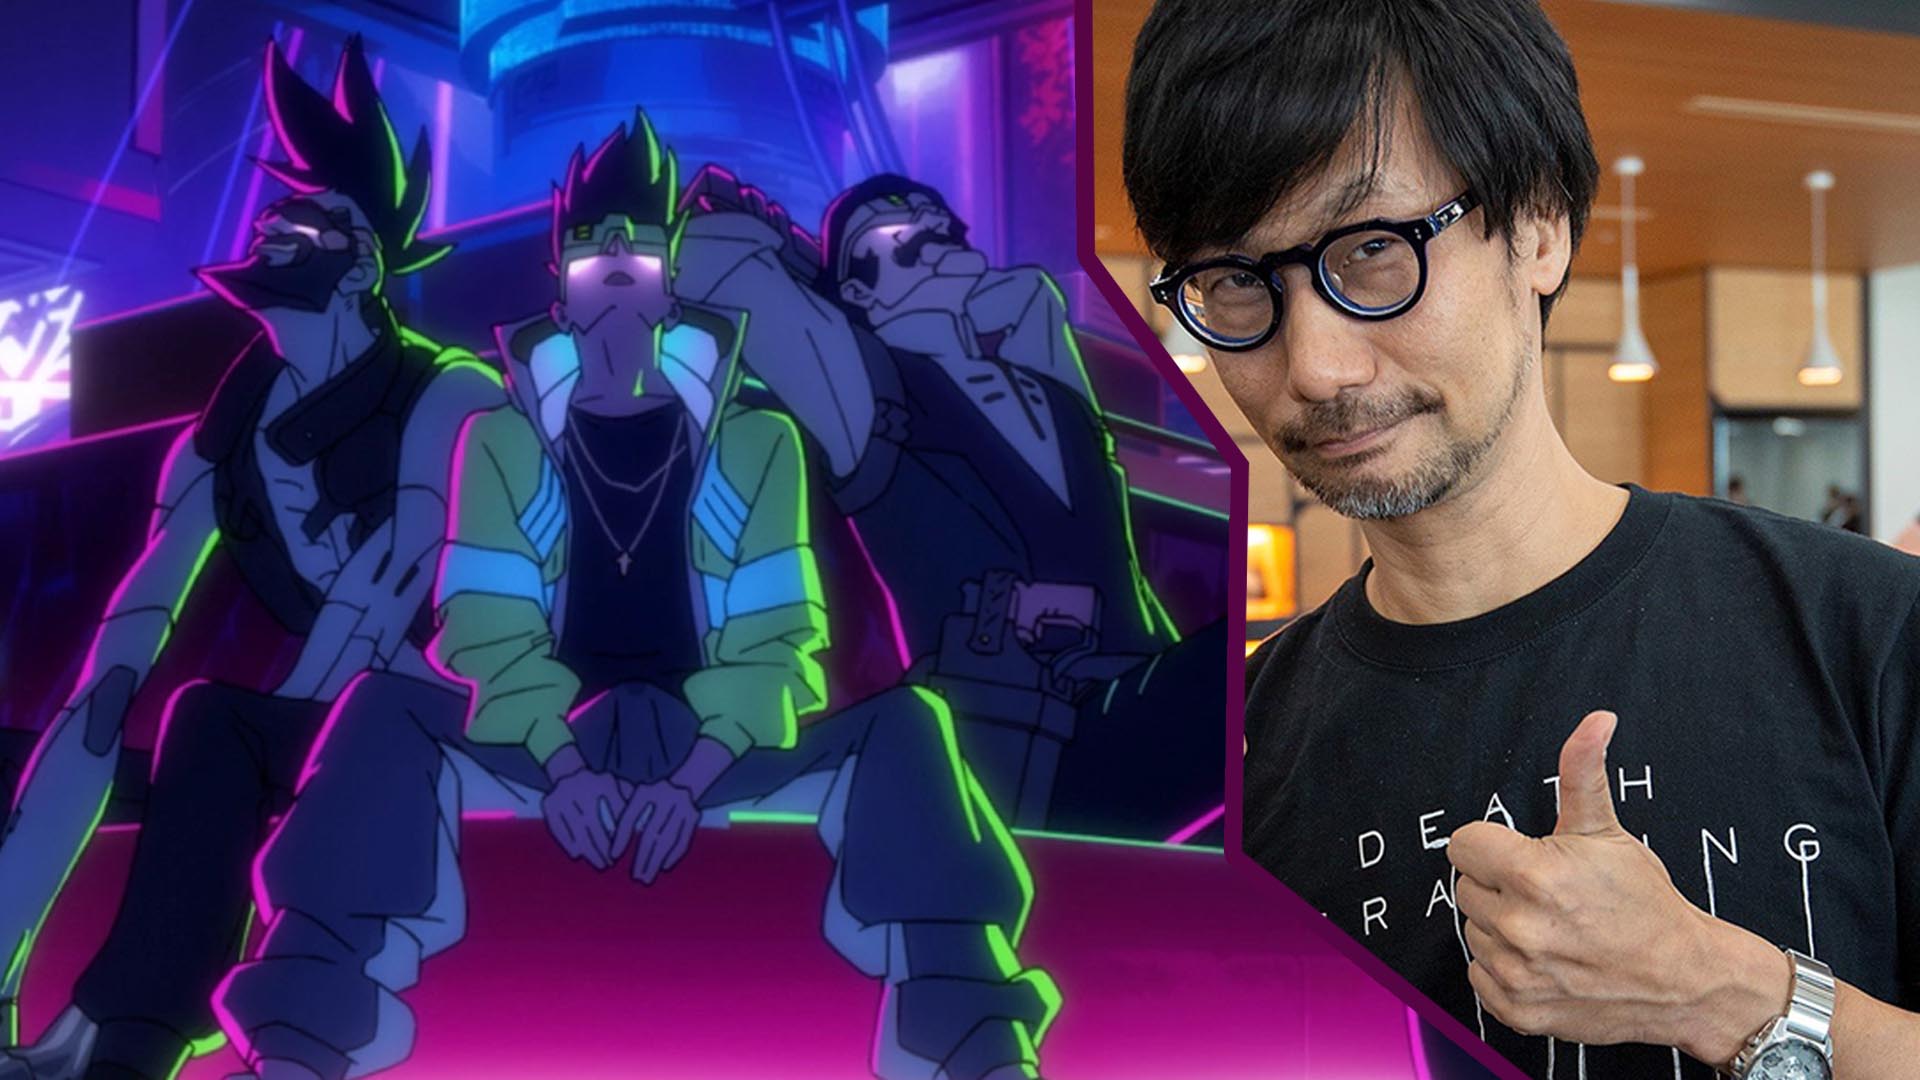 Hideo Kojima Praised Cyberpunk Edgerunners